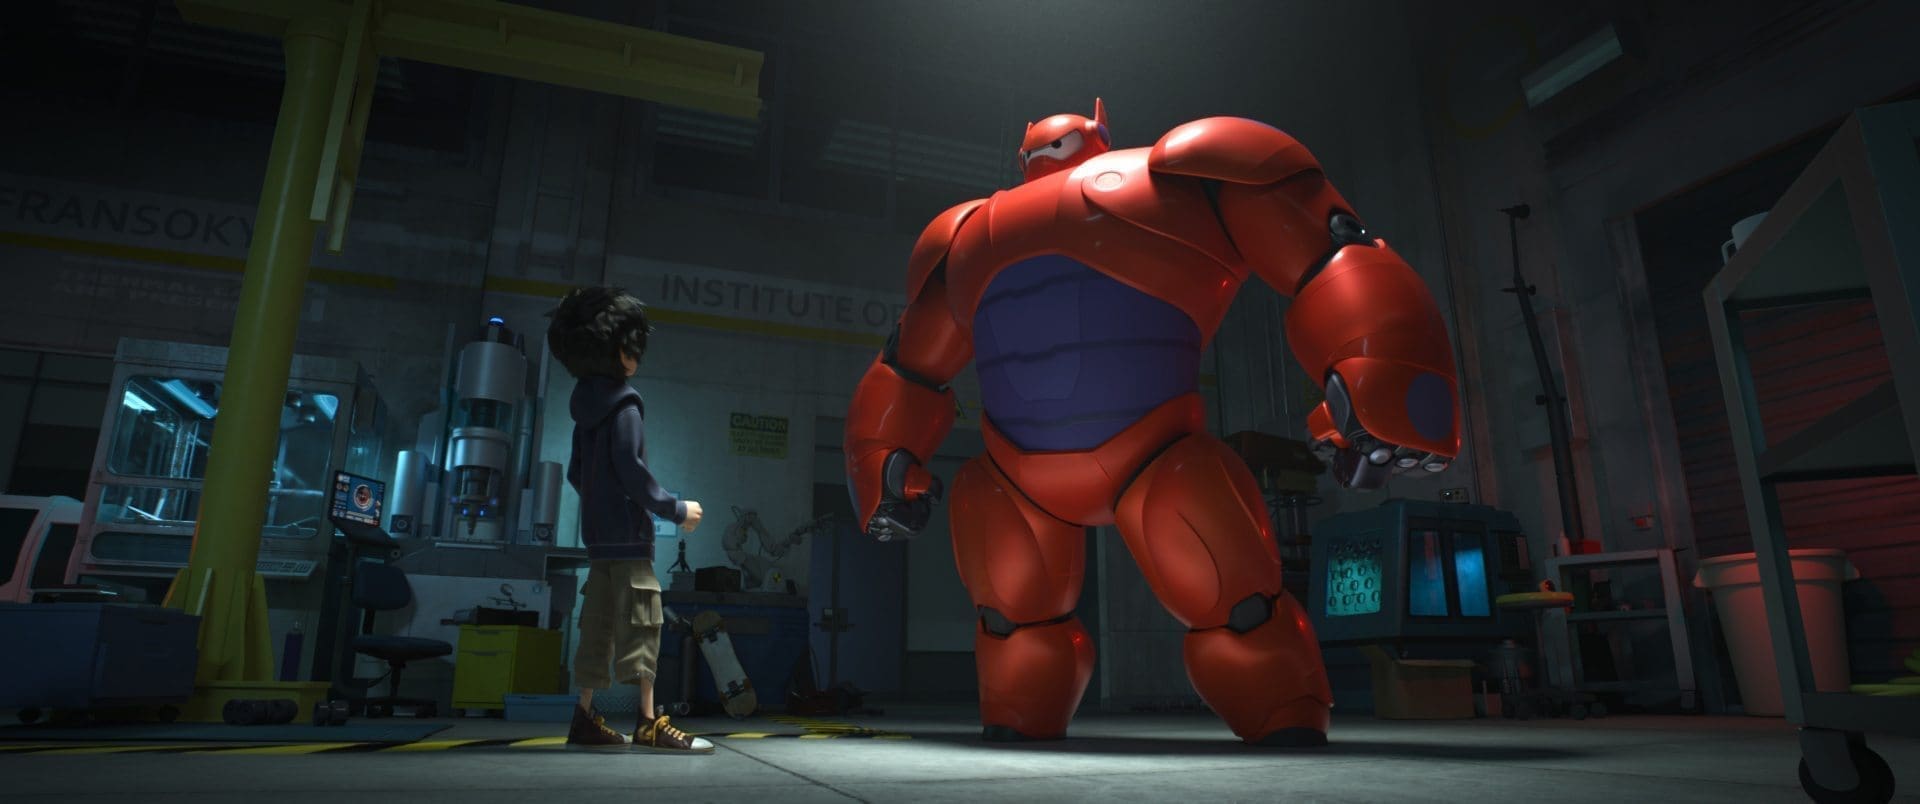 Big Hero 6, disney, Disney Animation, trailer